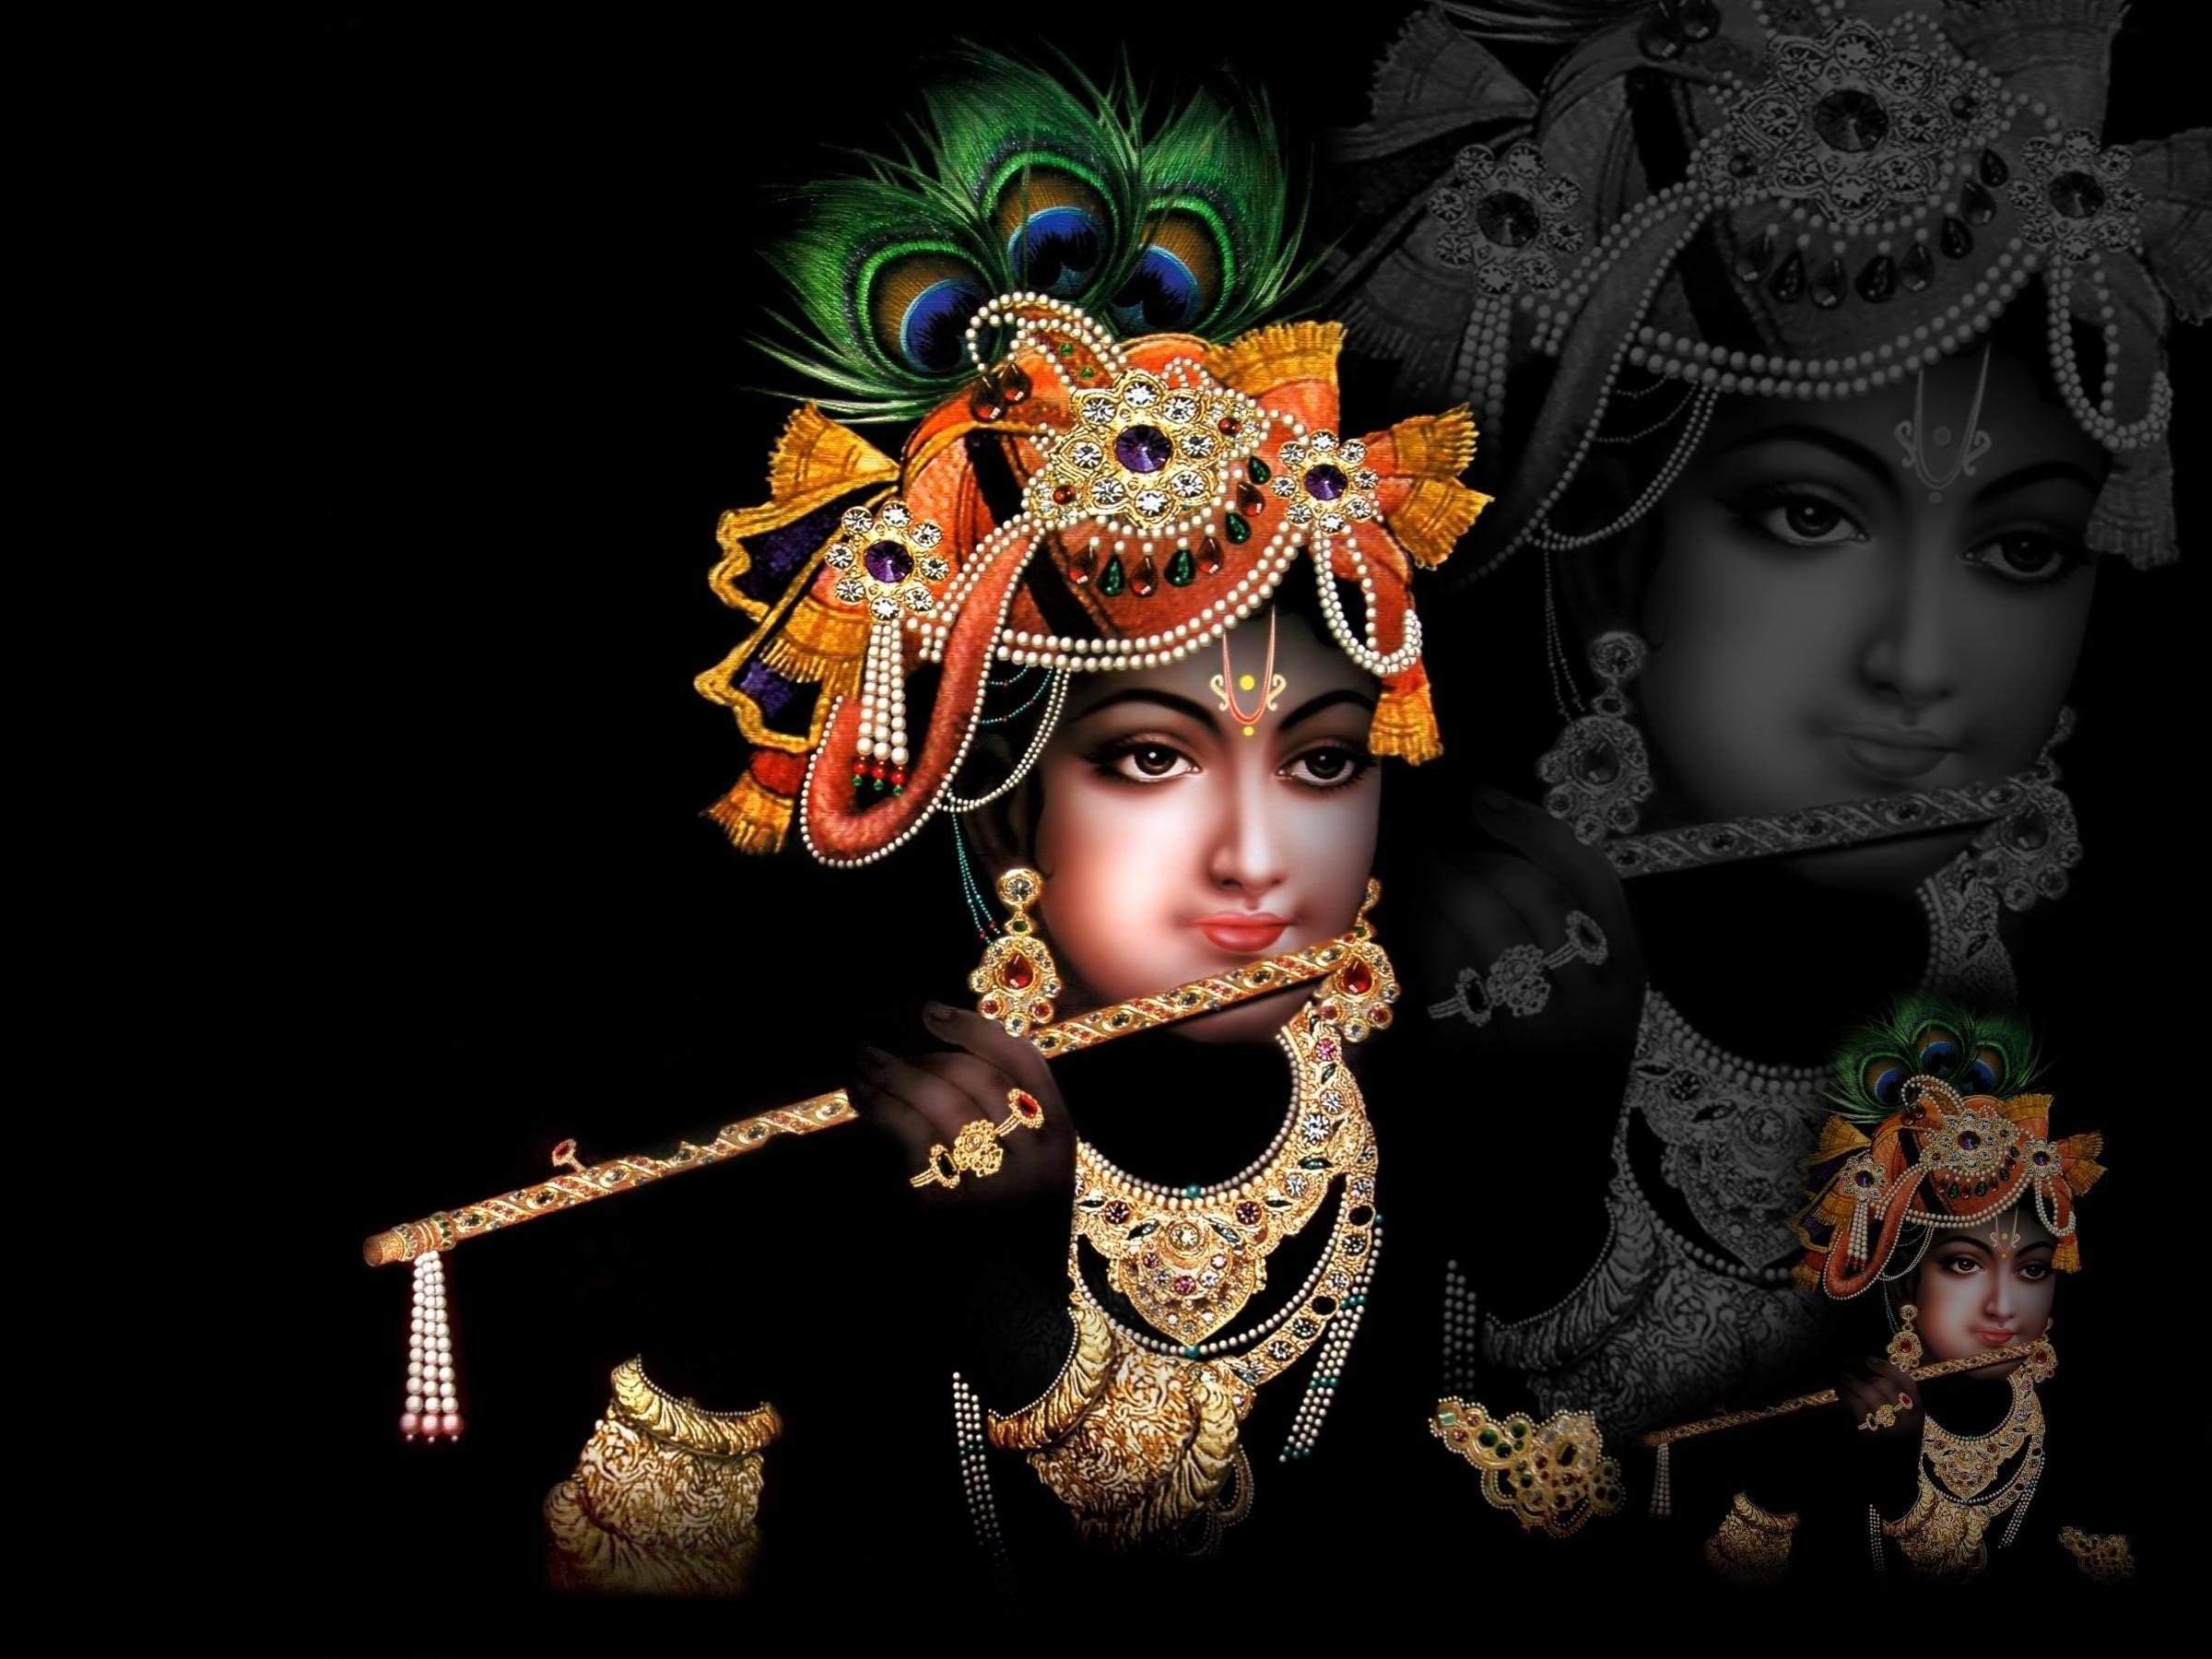 2661 Lord Krishna Wallpaper Images Stock Photos  Vectors  Shutterstock